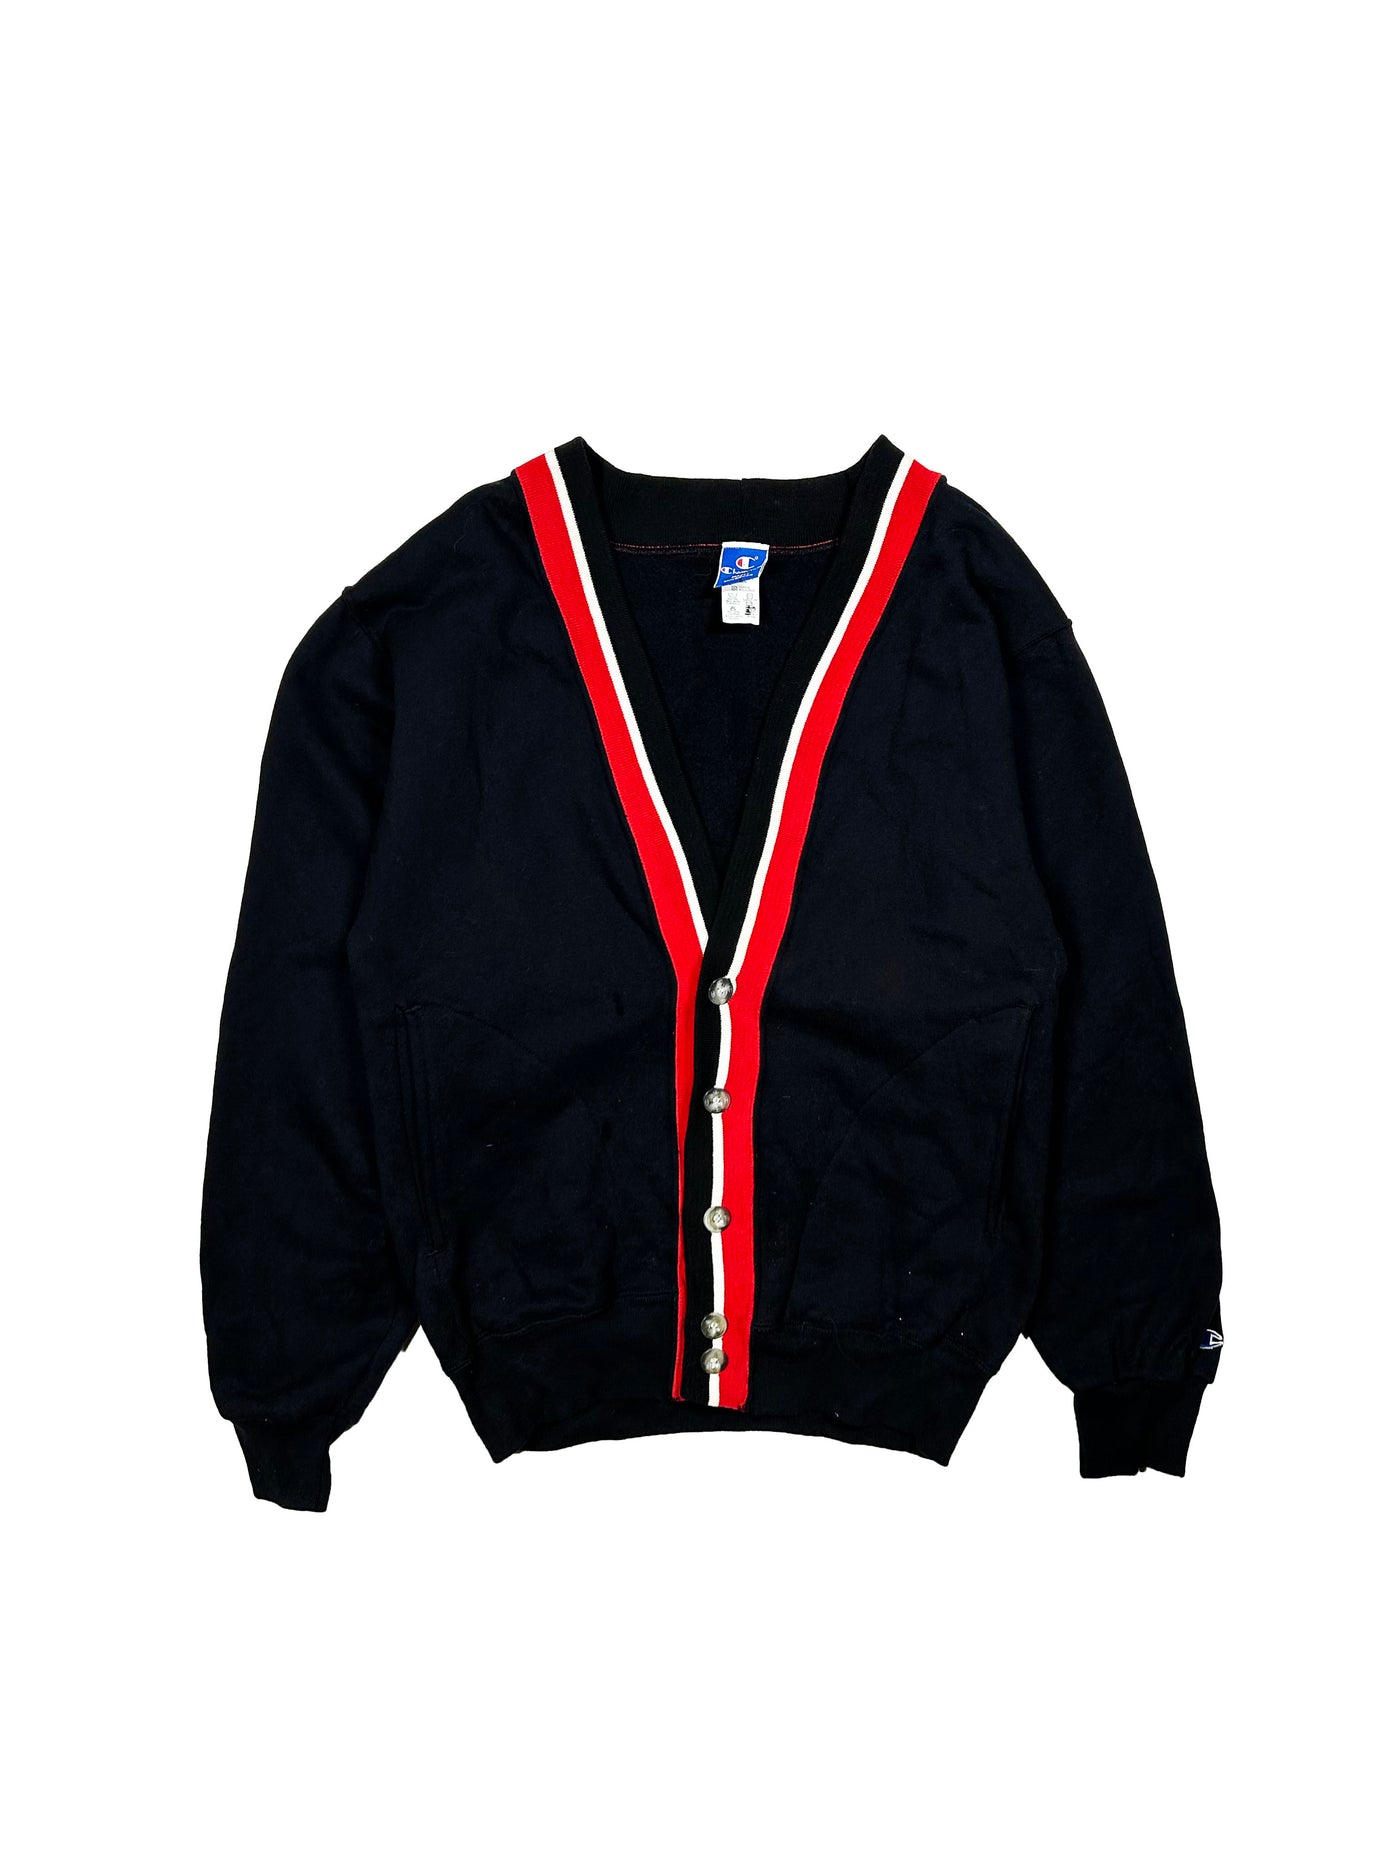 Vintage 90s Champion Cardigan Sweatshirt